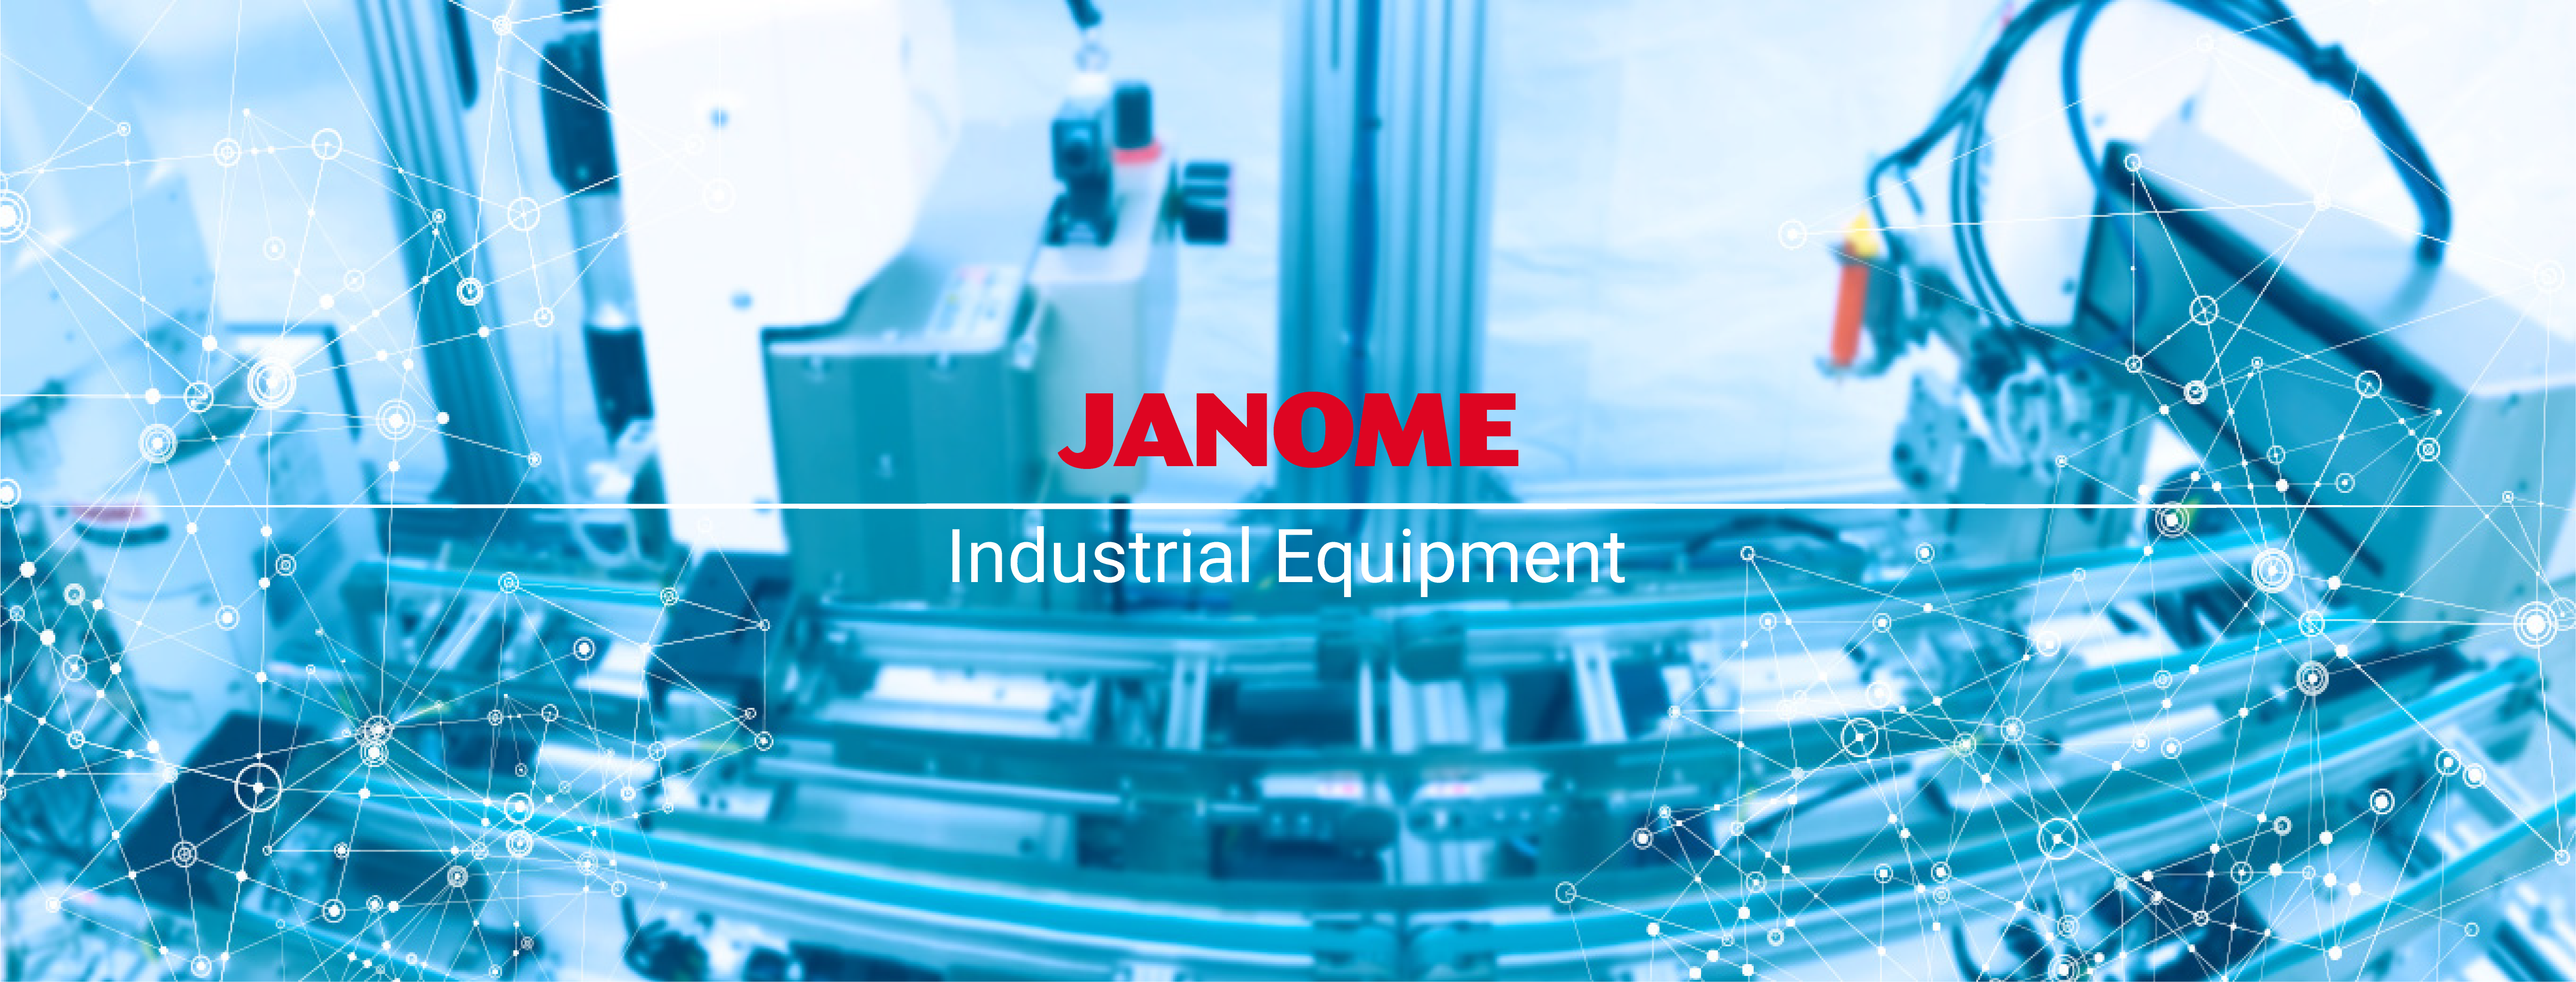 Janome Industrial Equipment